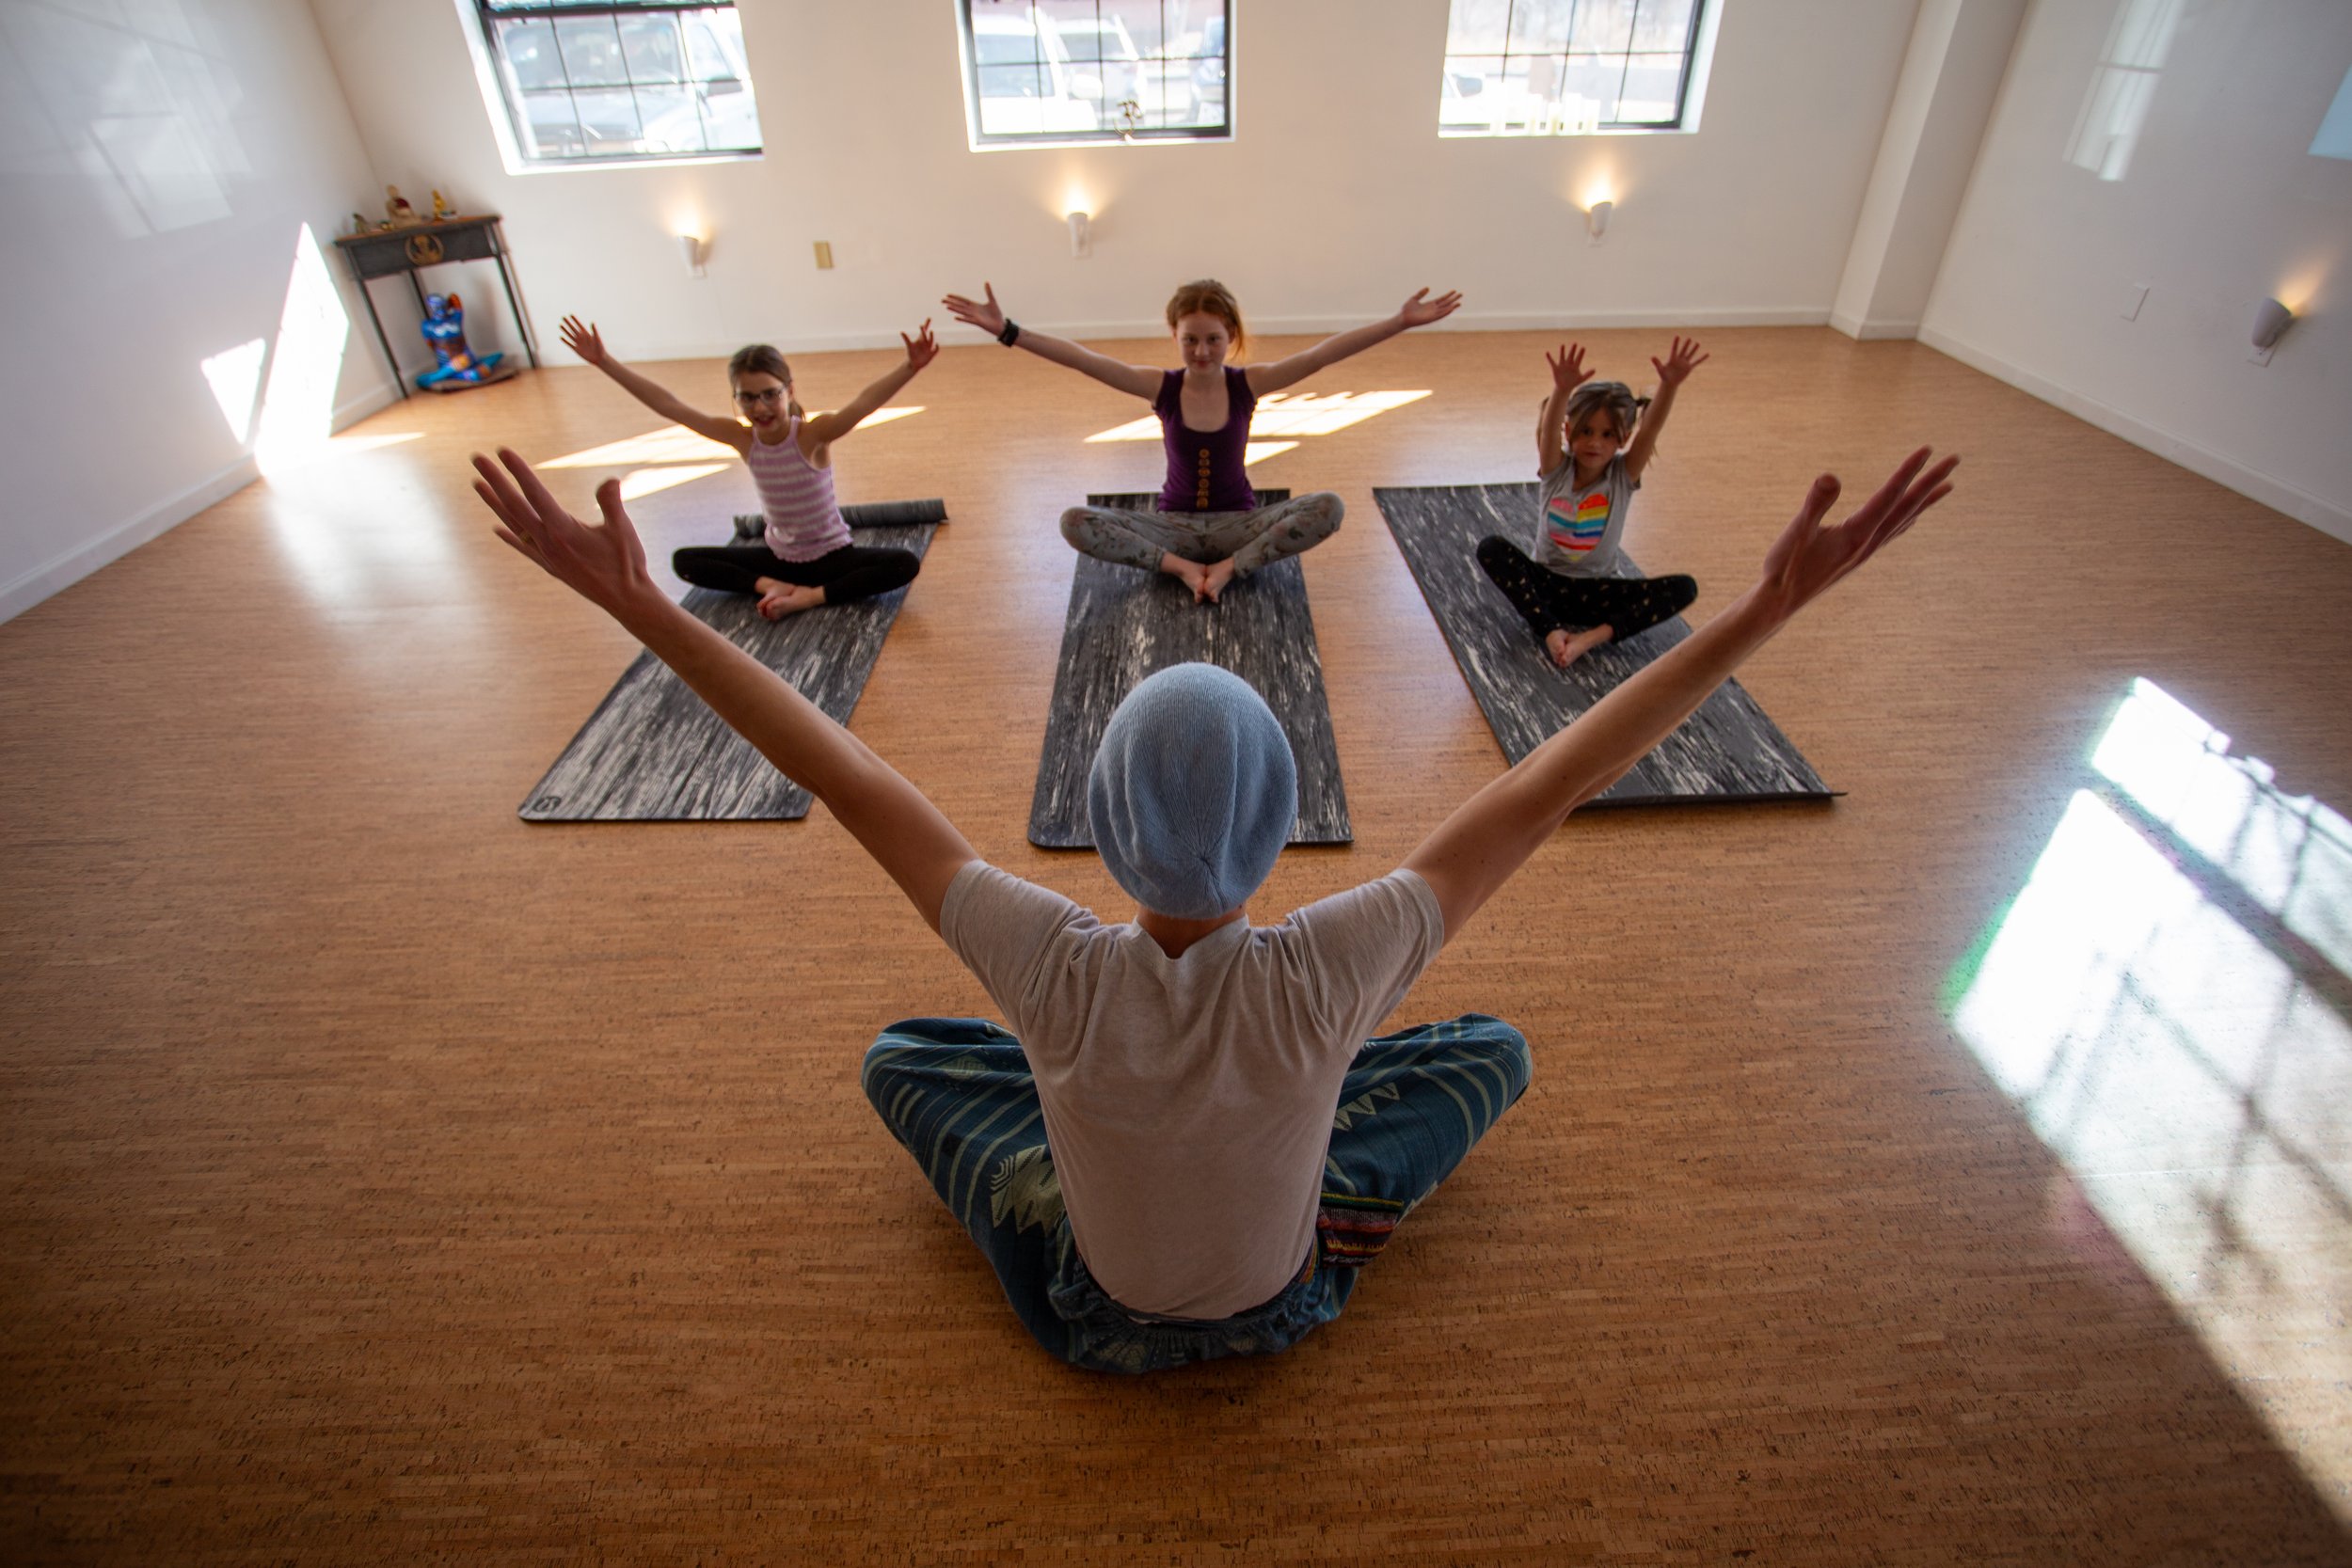 Santa Fe Community Yoga Center